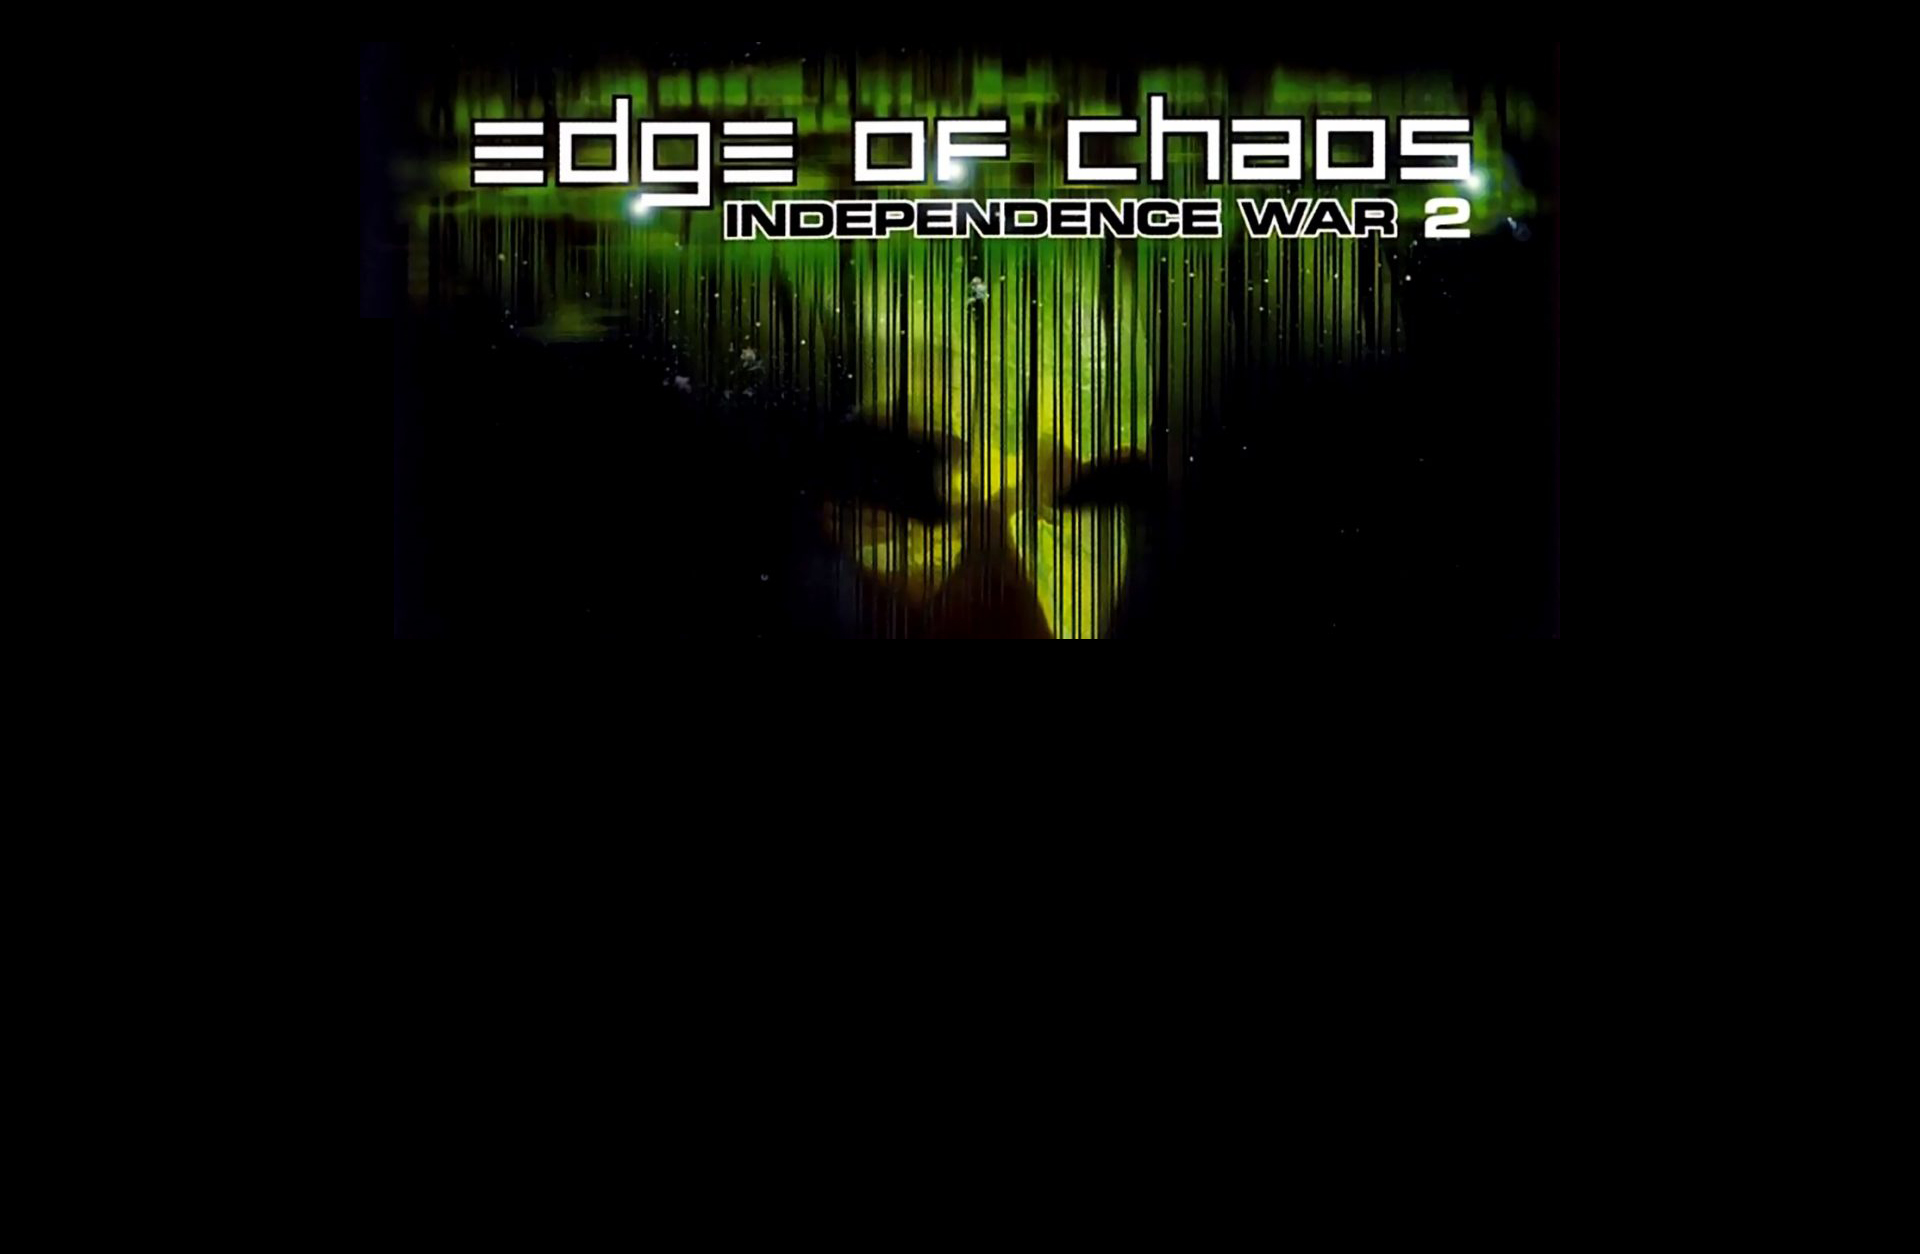 Independance War 2: Edge Of Chaos